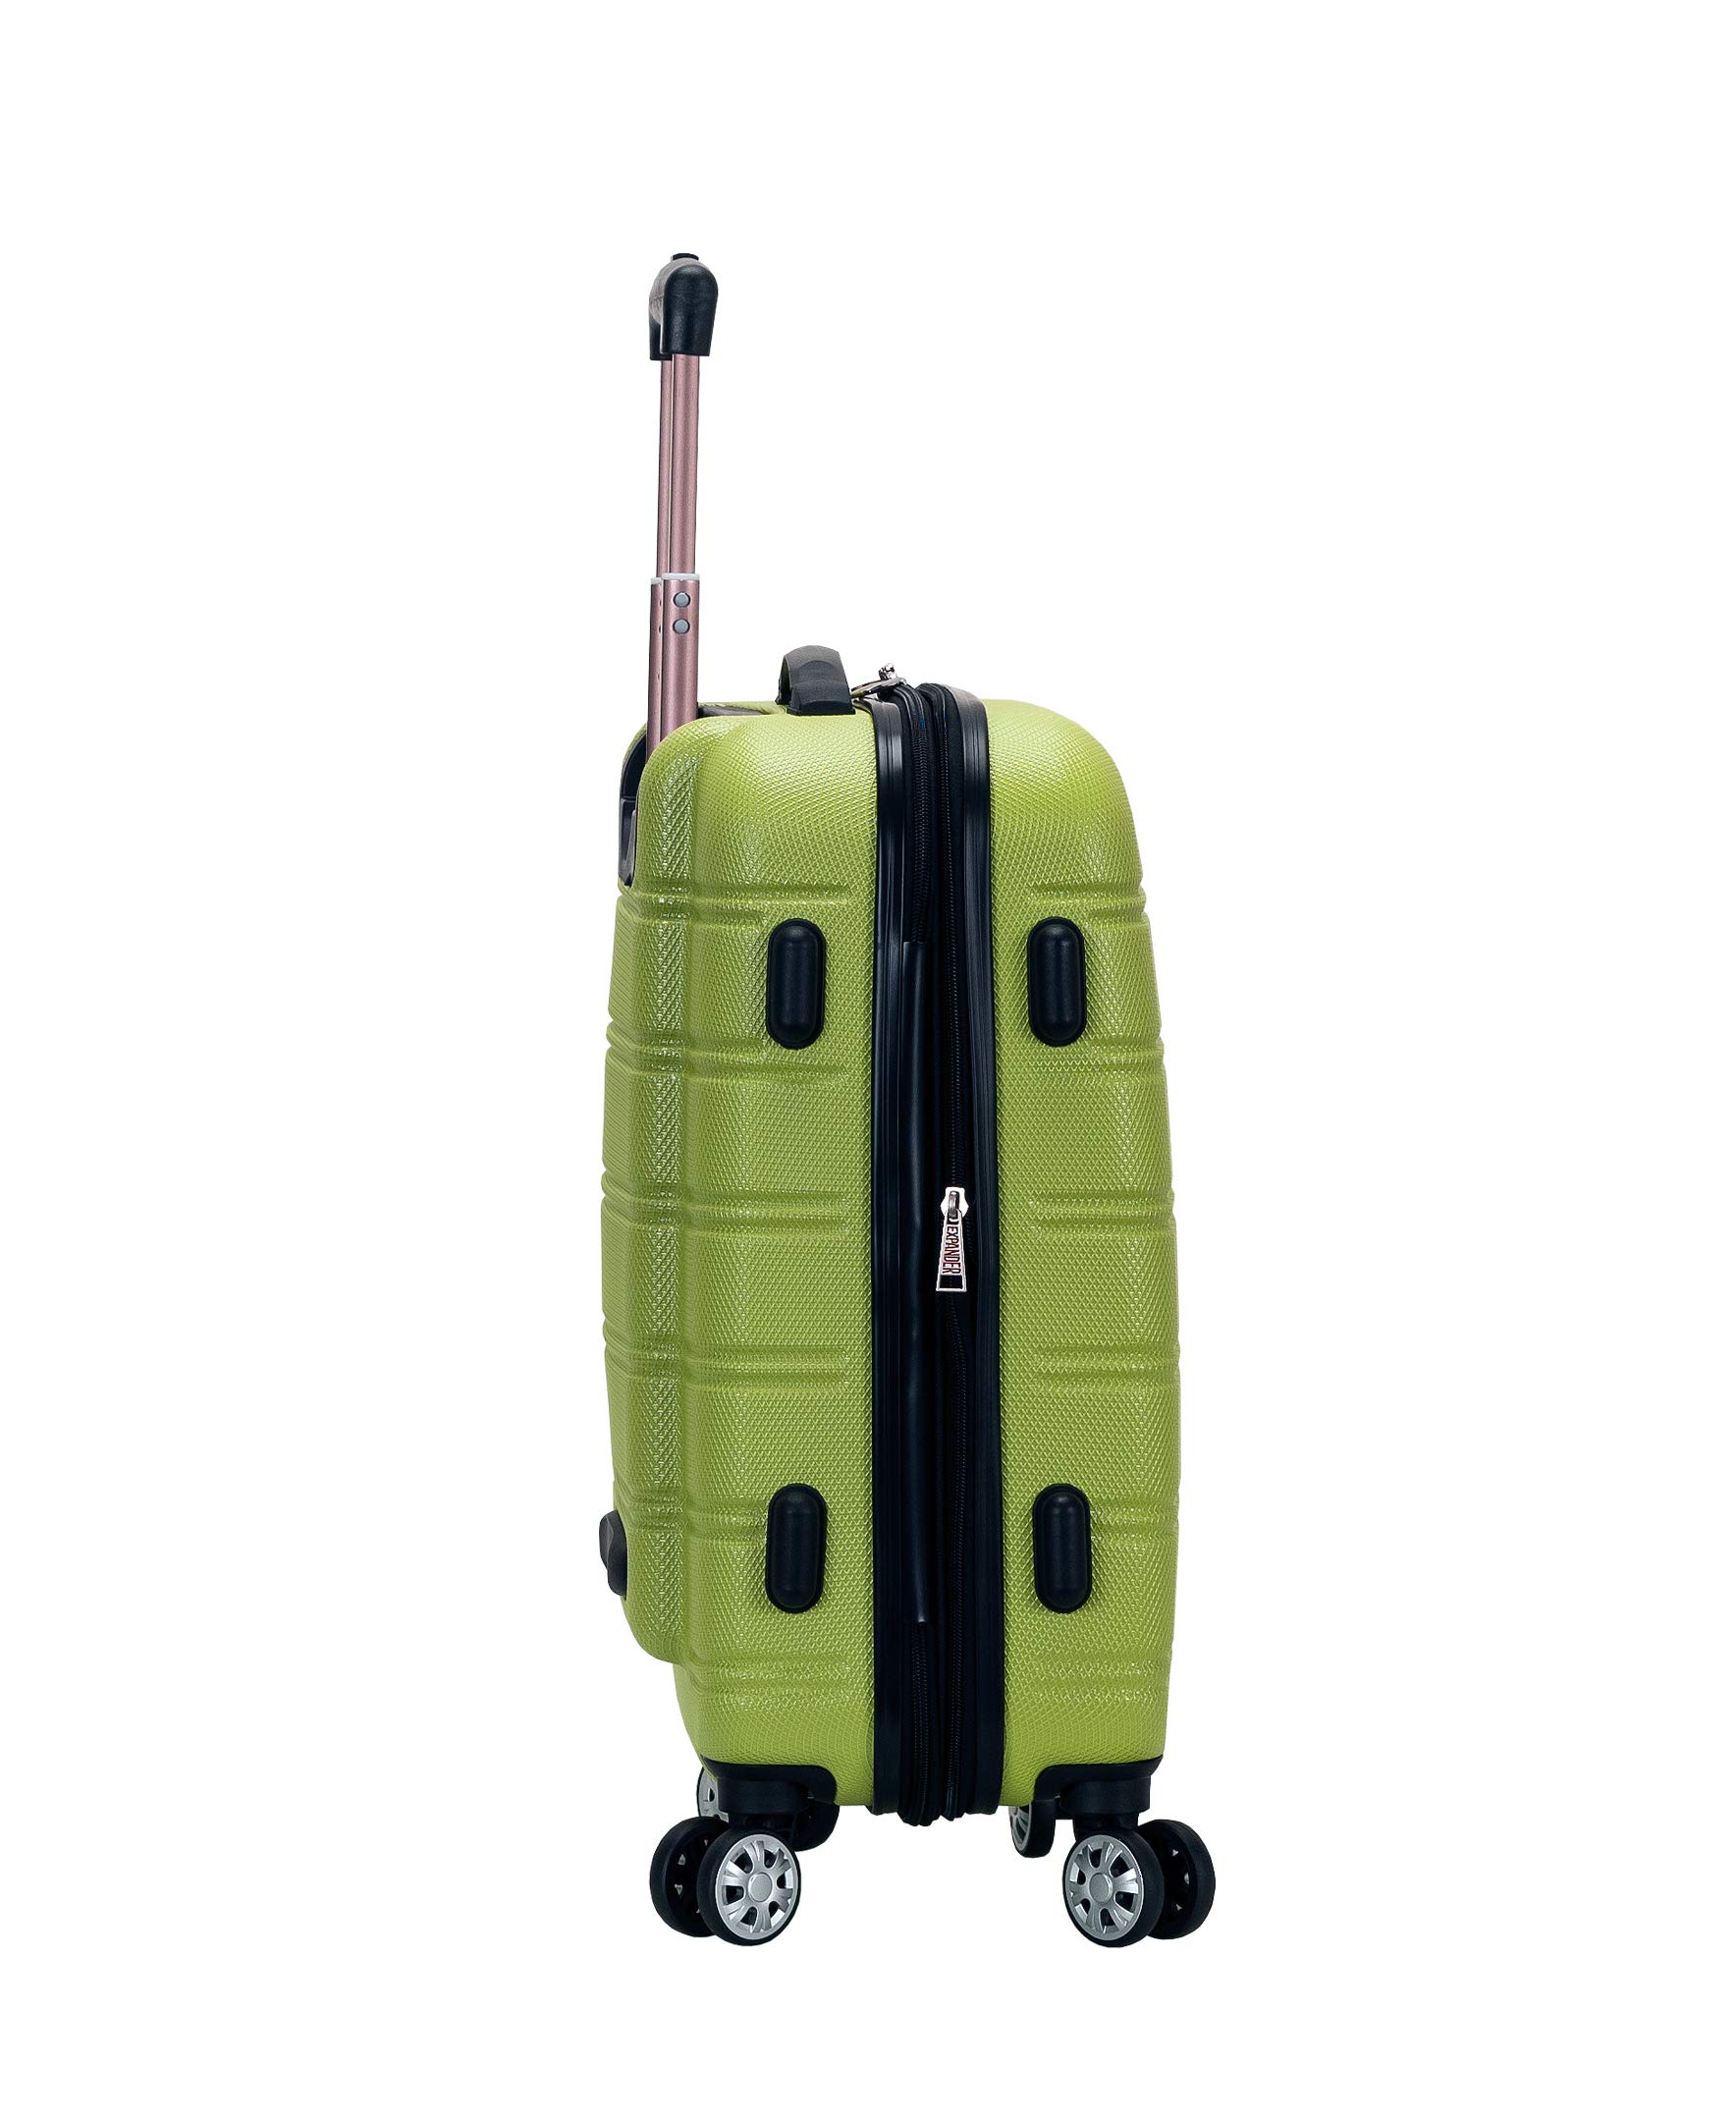 20" Rockland Melbourne Hardside Expandable Spinner Wheel Luggage (Lime) $21.80